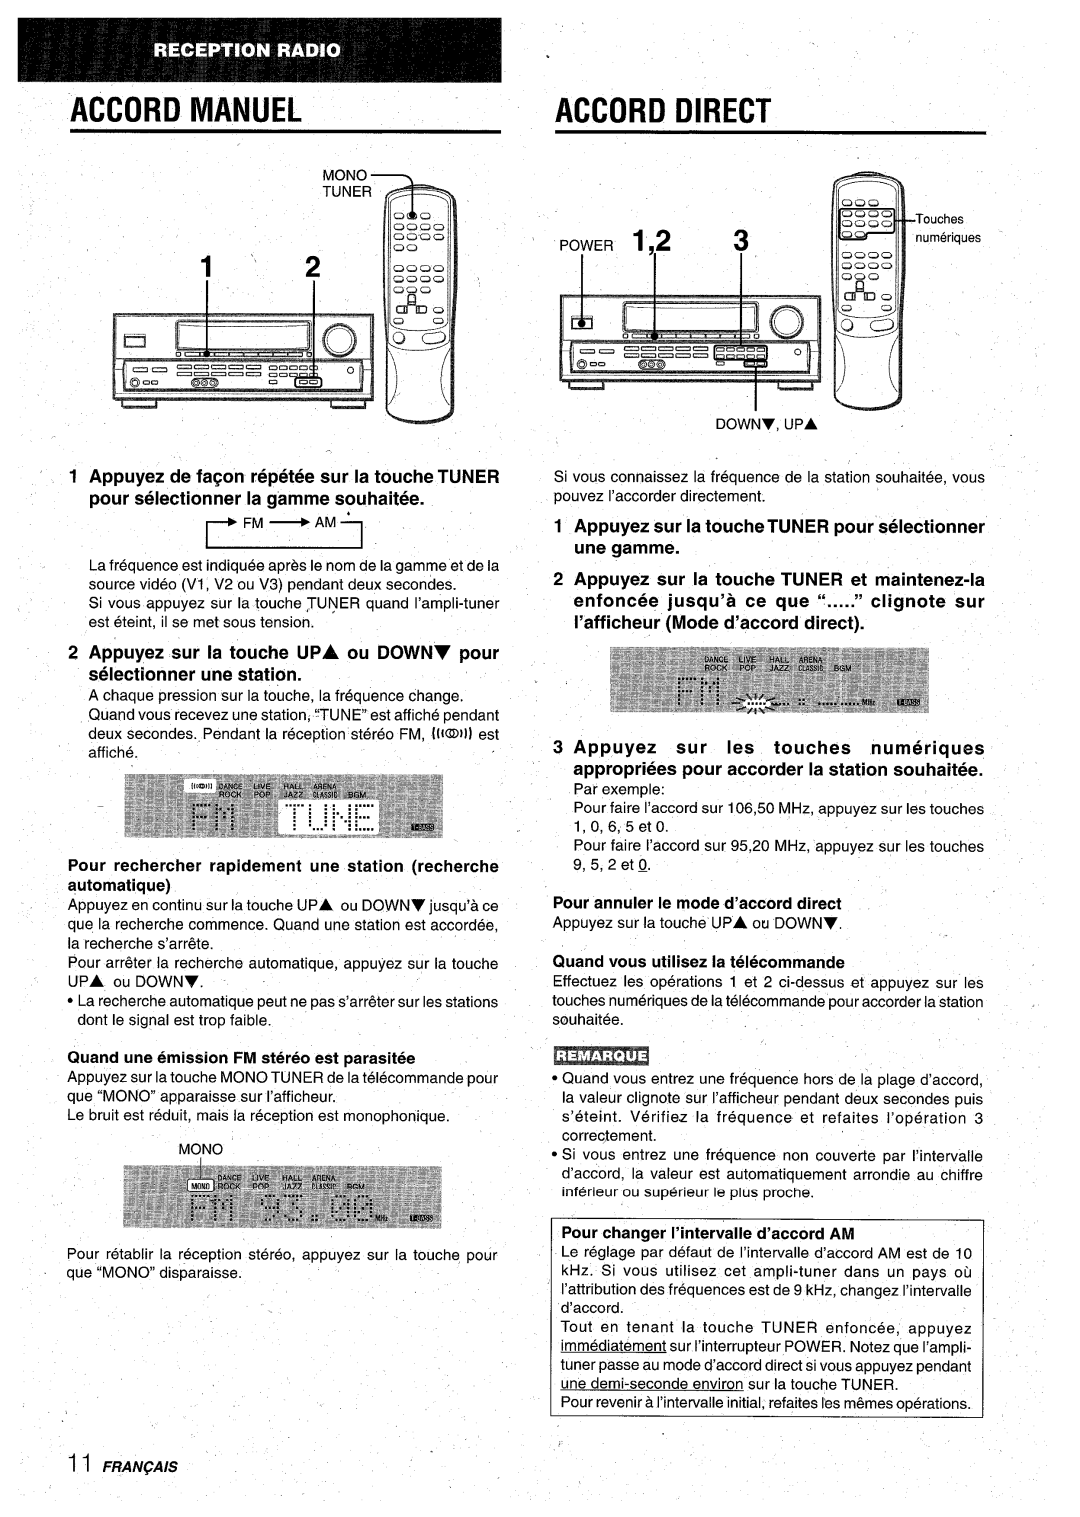 Aiwa AV-D30 Accord Direct, Accord Manuel, I’afficheur Mode d’accord direct, Quand une emission FM stereo est parasitee 